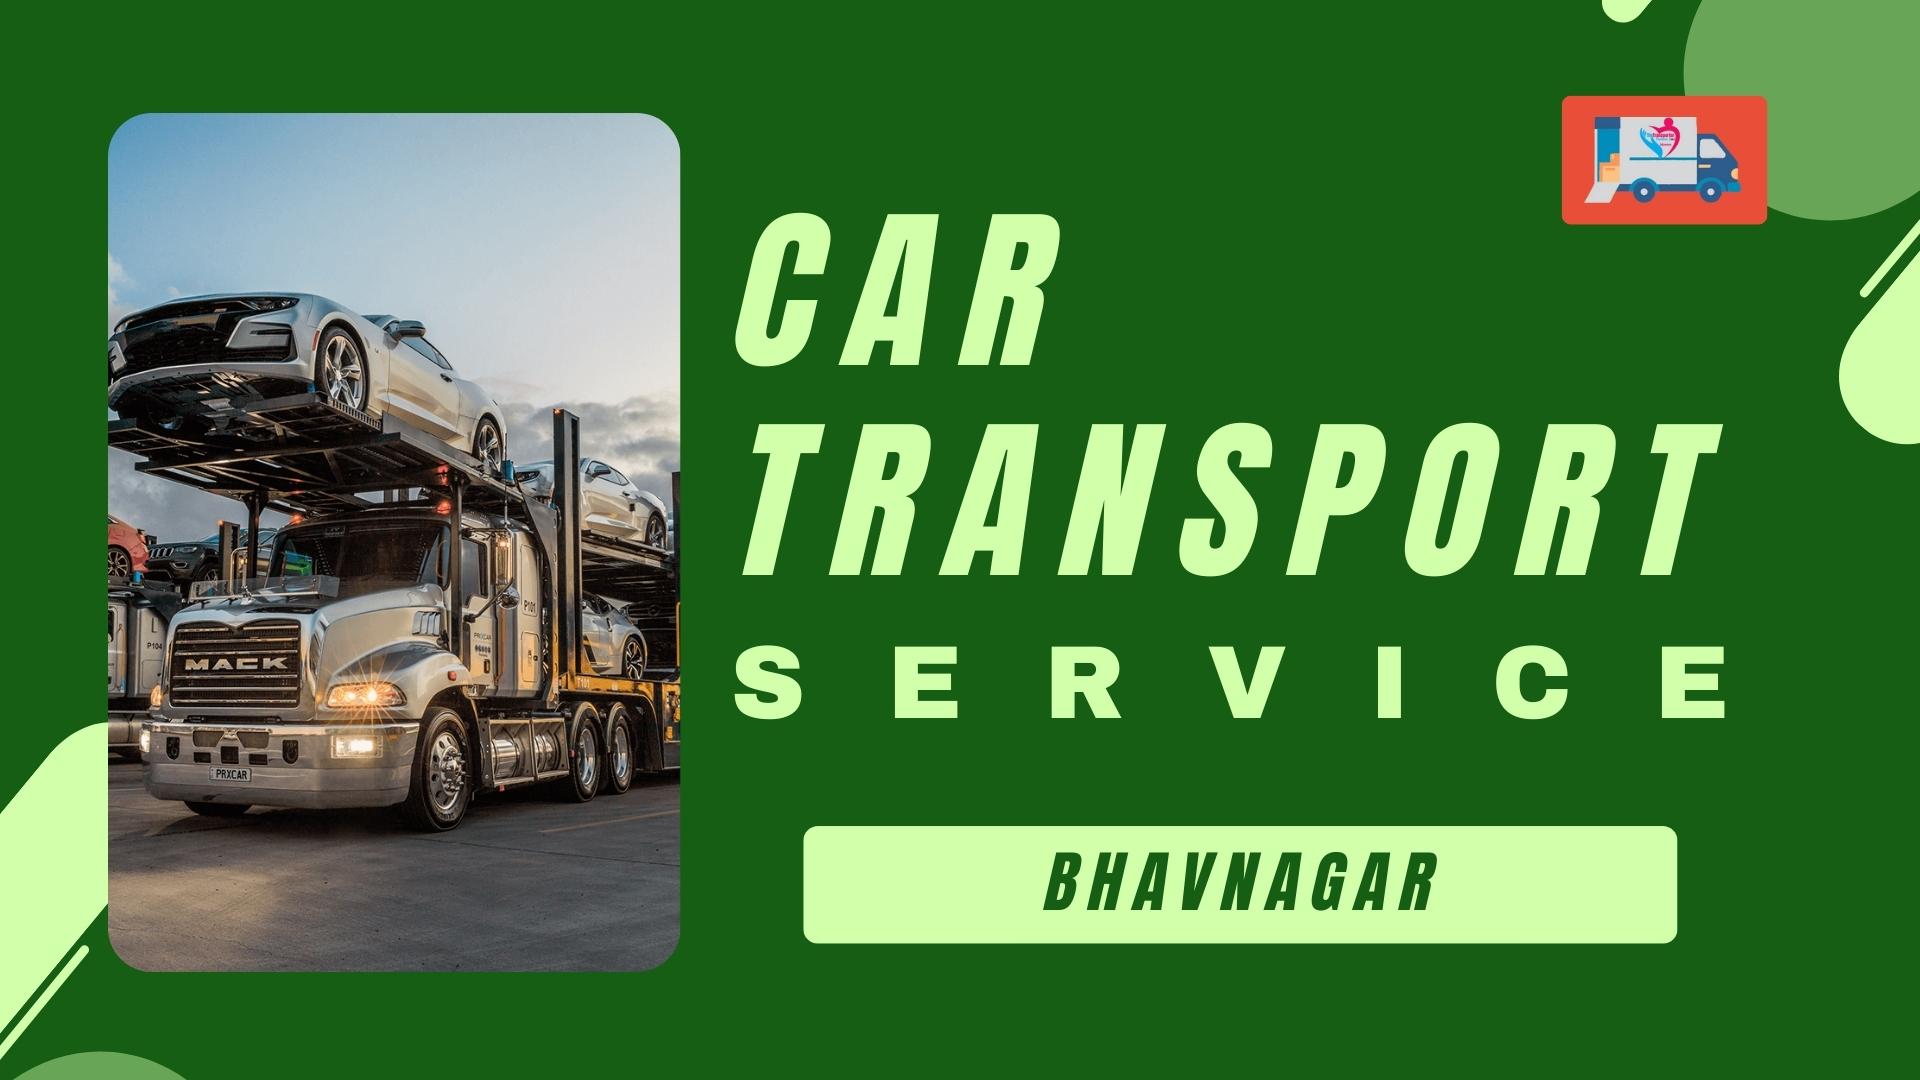 Quality car Carrier Service in Bhavnagar